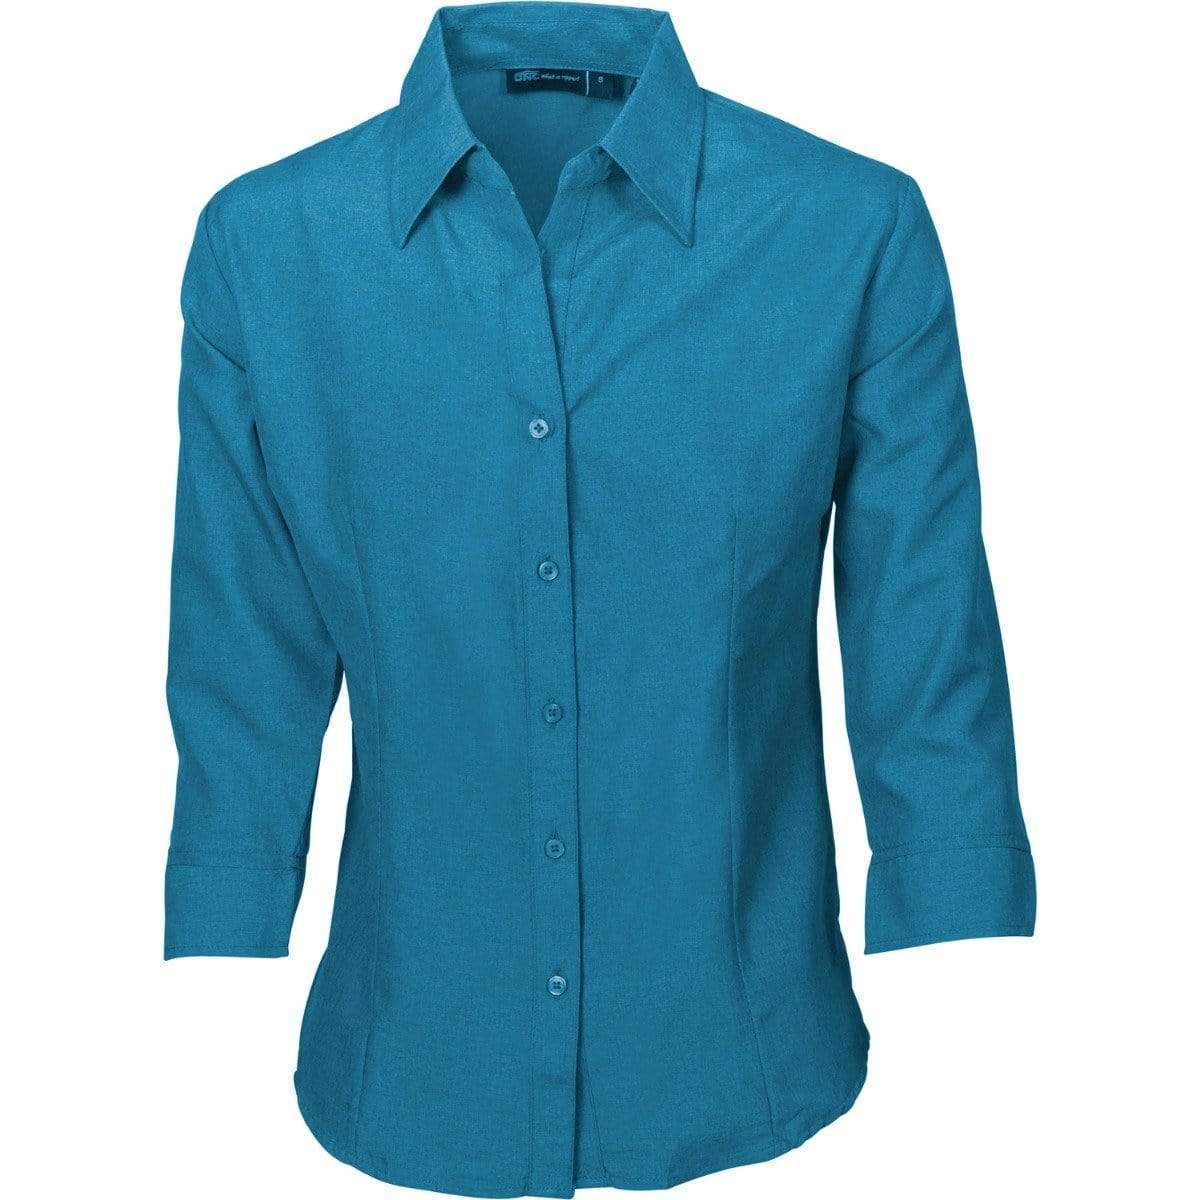 Dnc Workwear Ladies Cool-breathe 3/4 Sleeve Shirt - 4238 Corporate Wear DNC Workwear Teal 6 